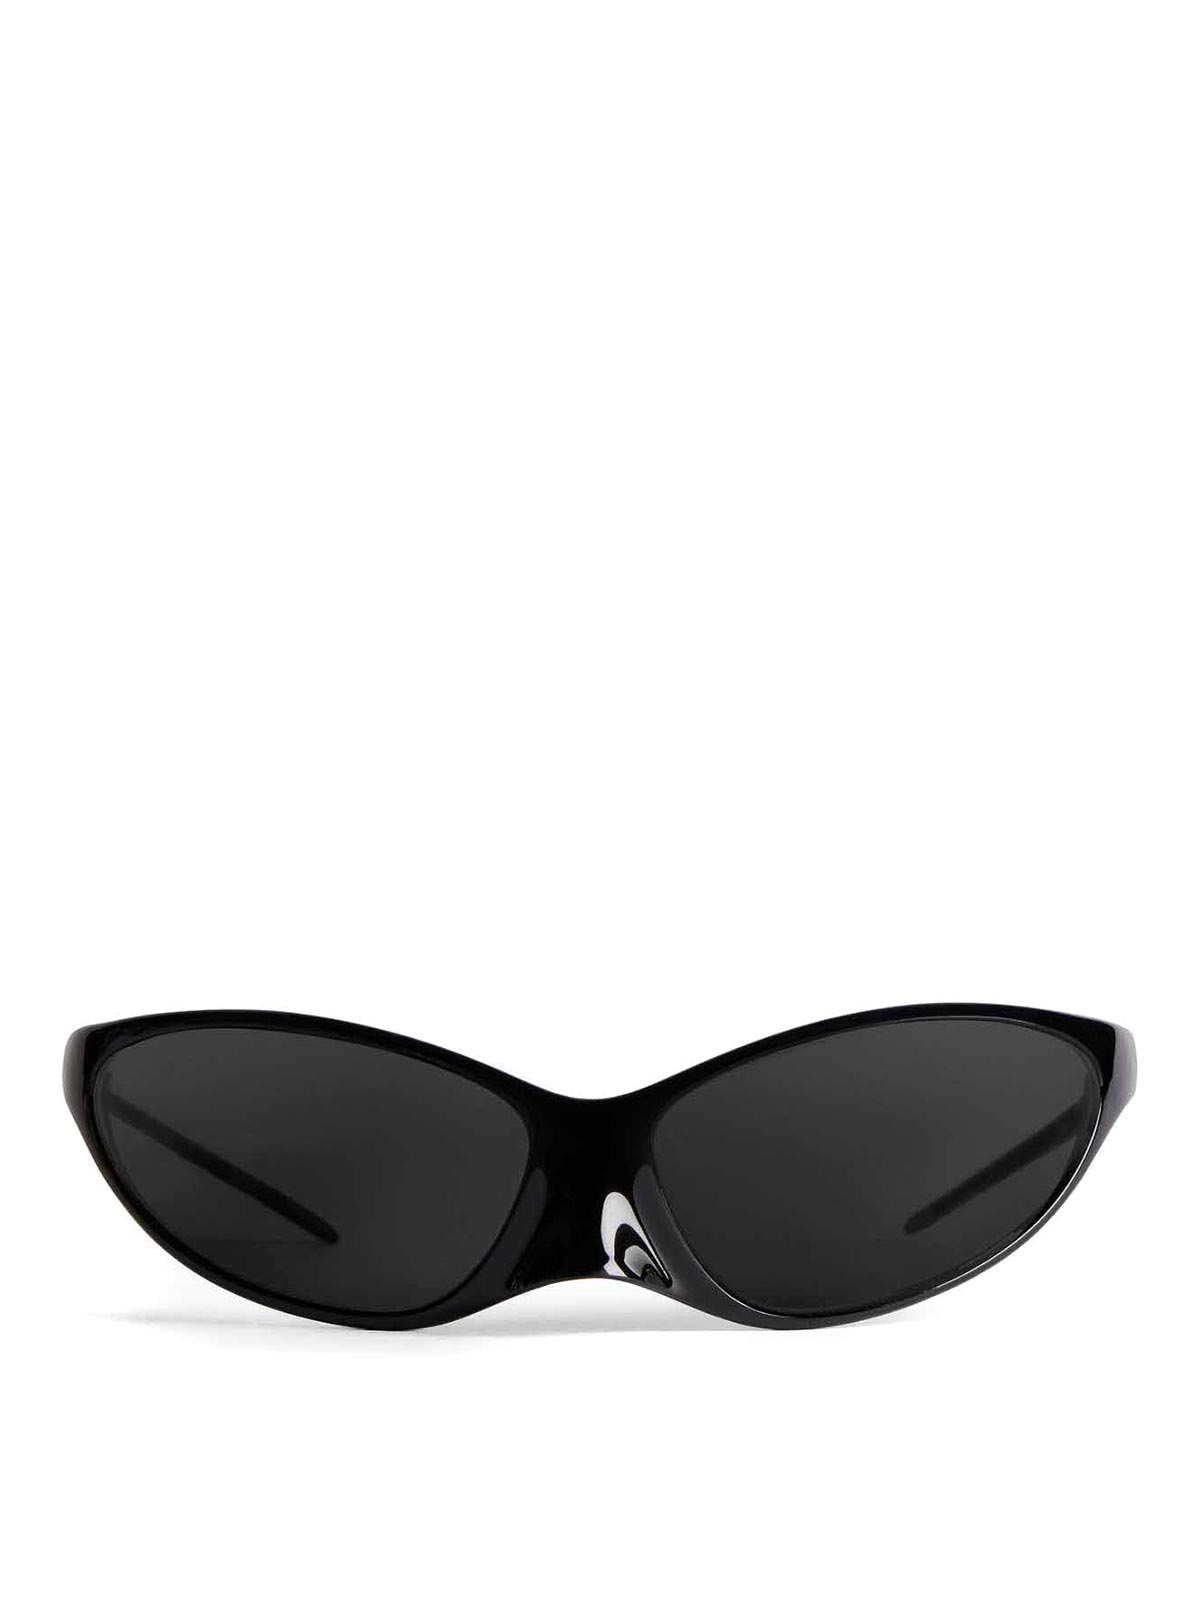 Balenciaga Black Sunglasses In Animal Print